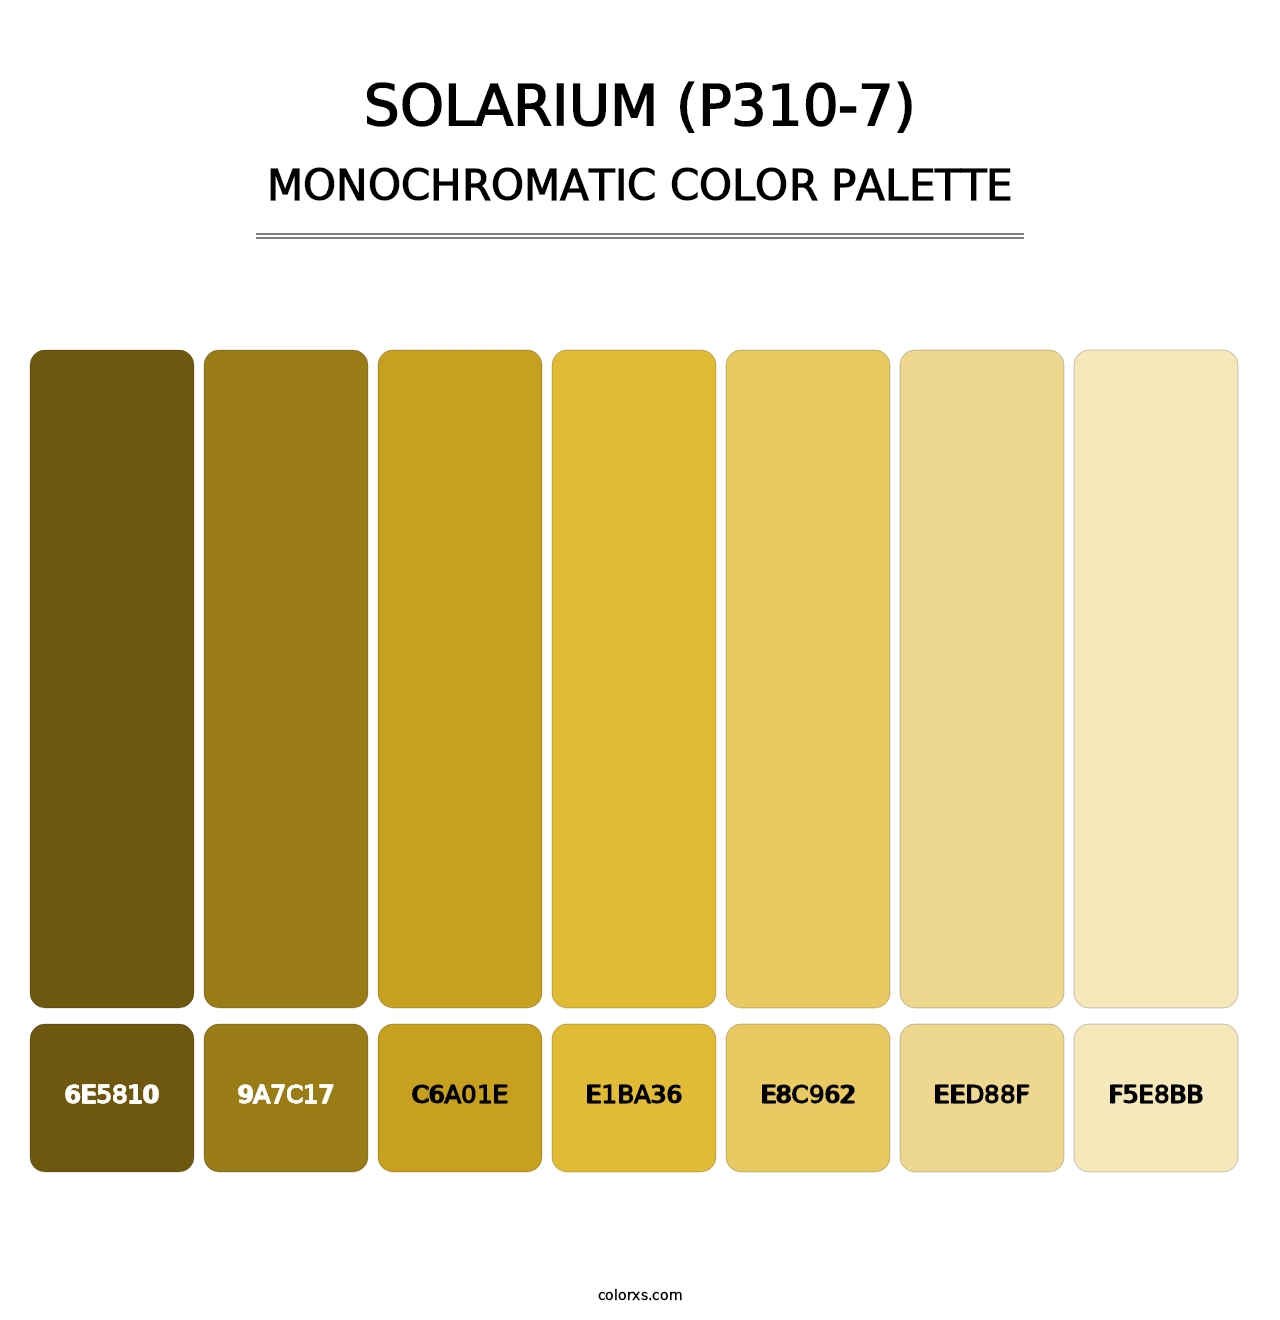 Solarium (P310-7) - Monochromatic Color Palette